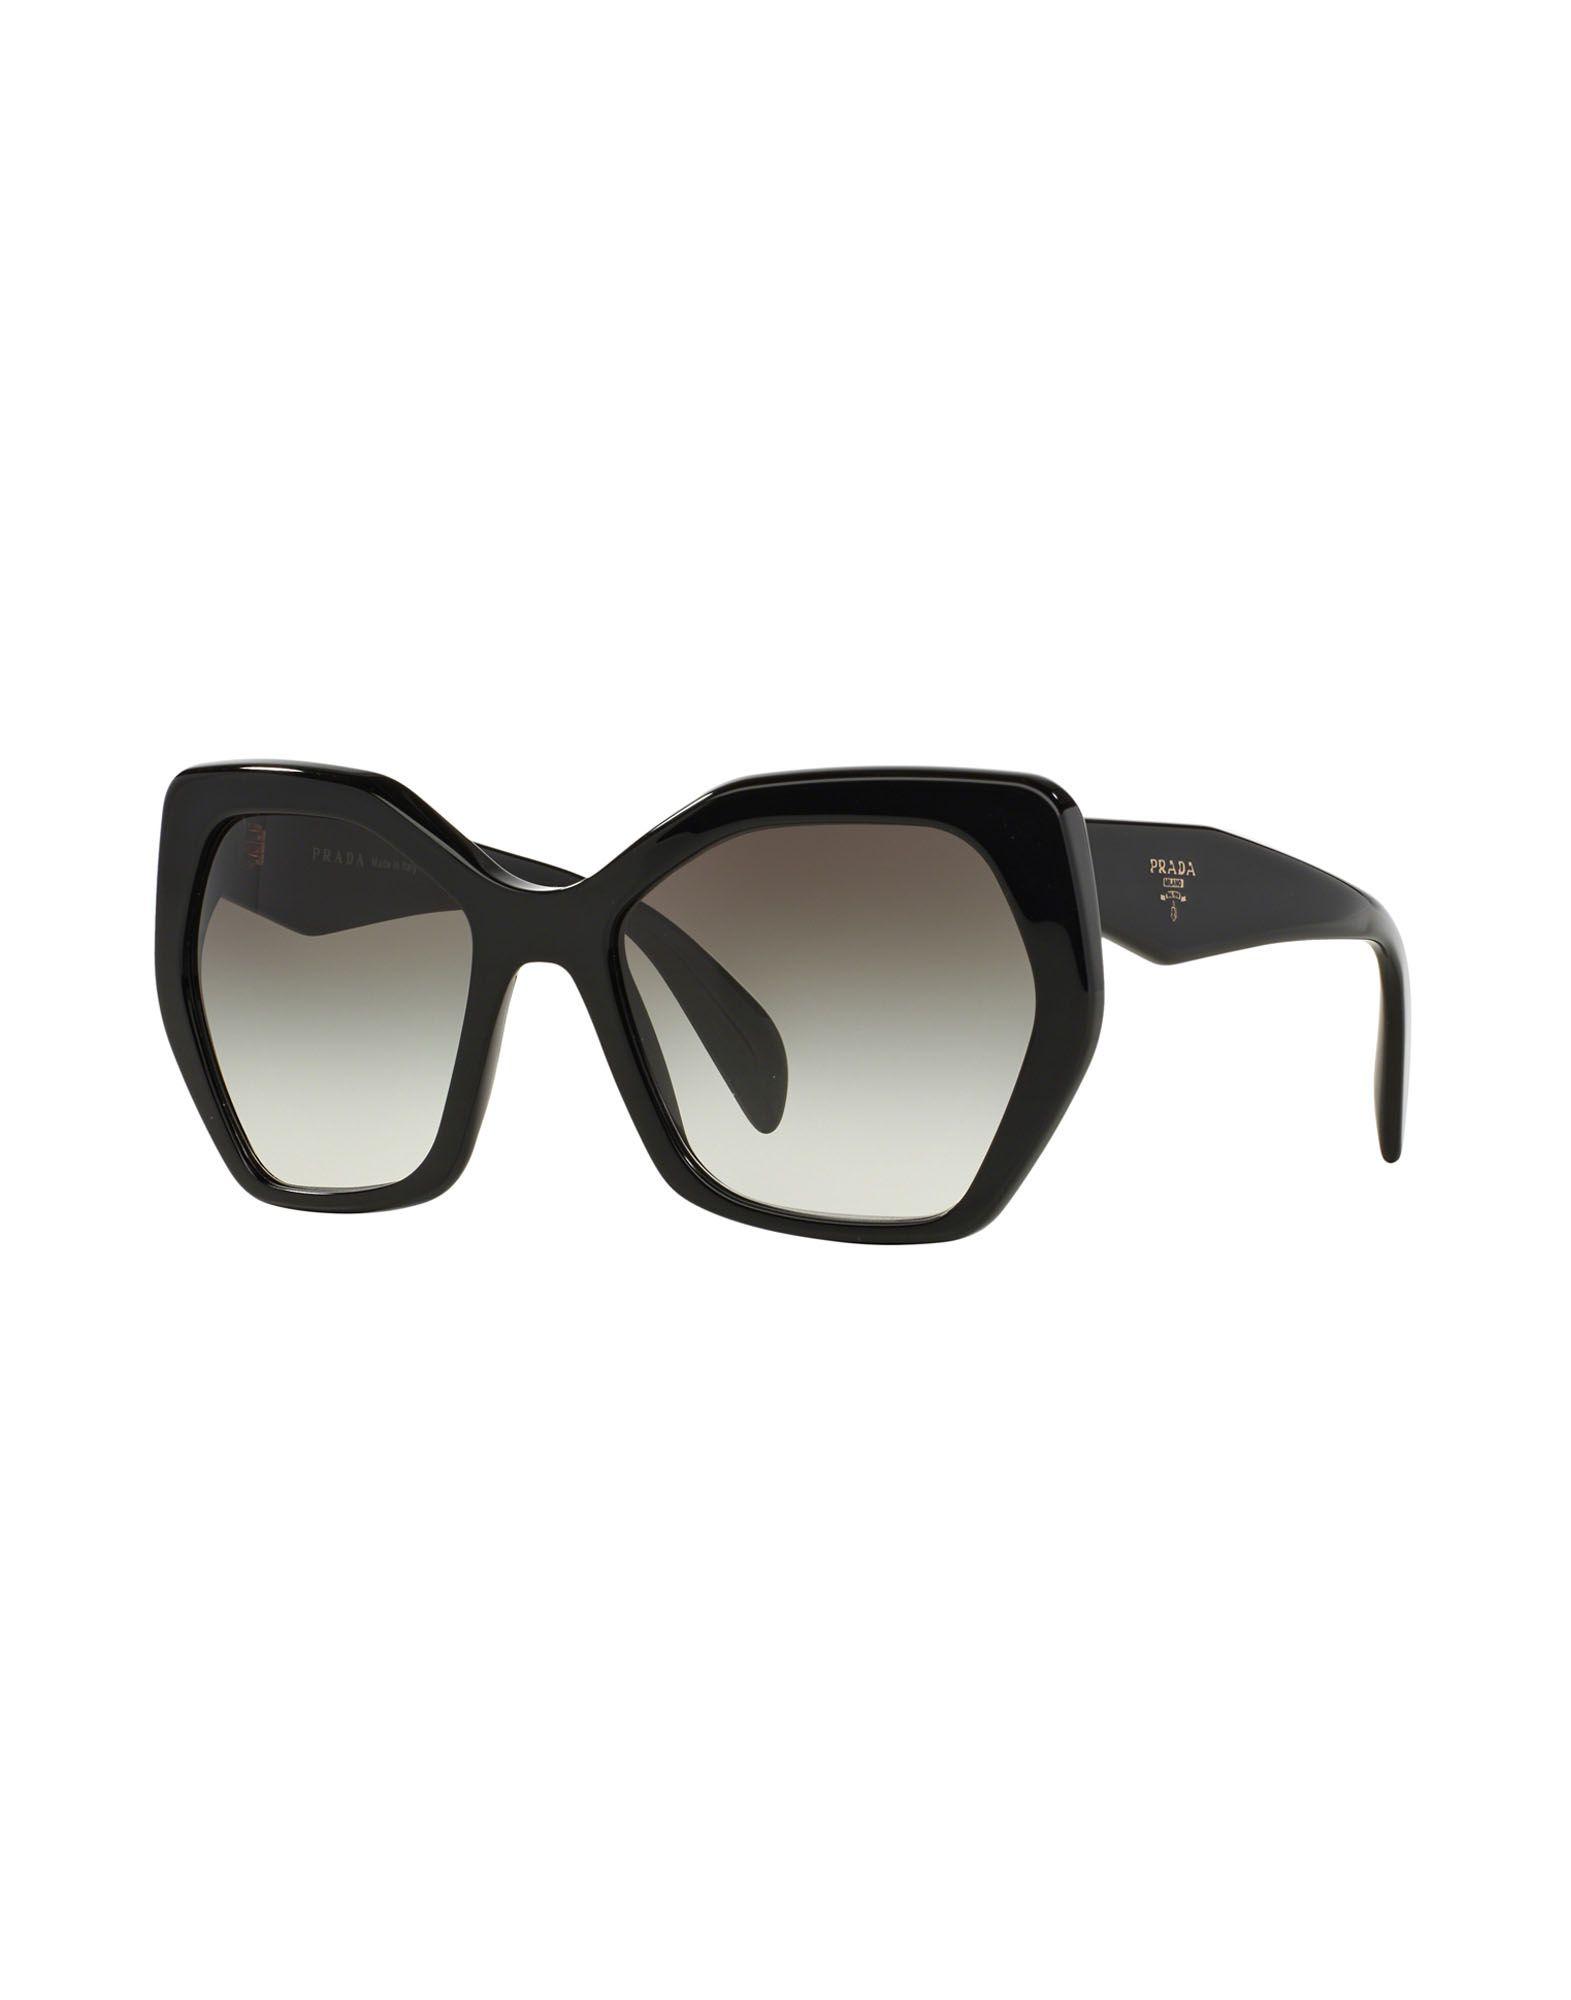 Prada Women's Oversized Geometric Sunglasses in Black - Save 30% - Lyst